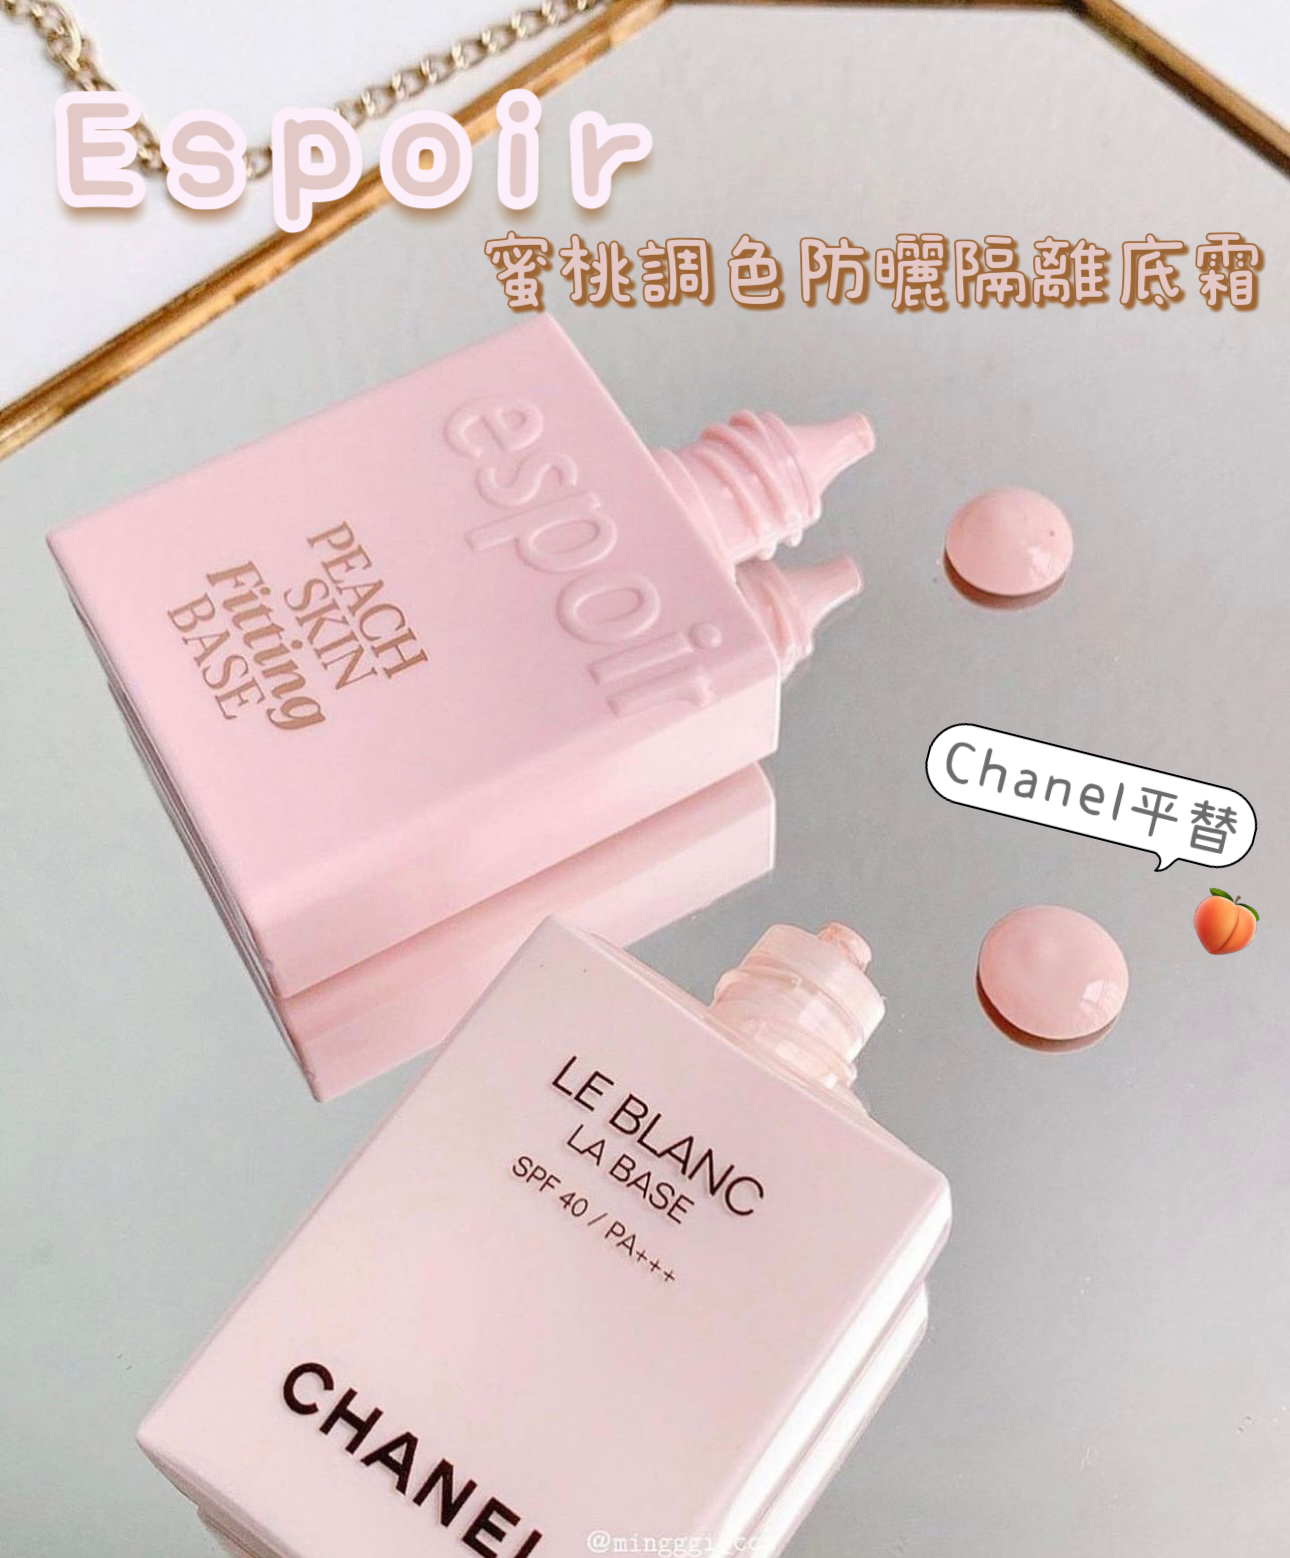 Chanel平替💫 | Espoir蜜桃調色防曬隔離底霜SPF41 PA++++ 🍑 | 為肌膚上妝前做好準備🎶